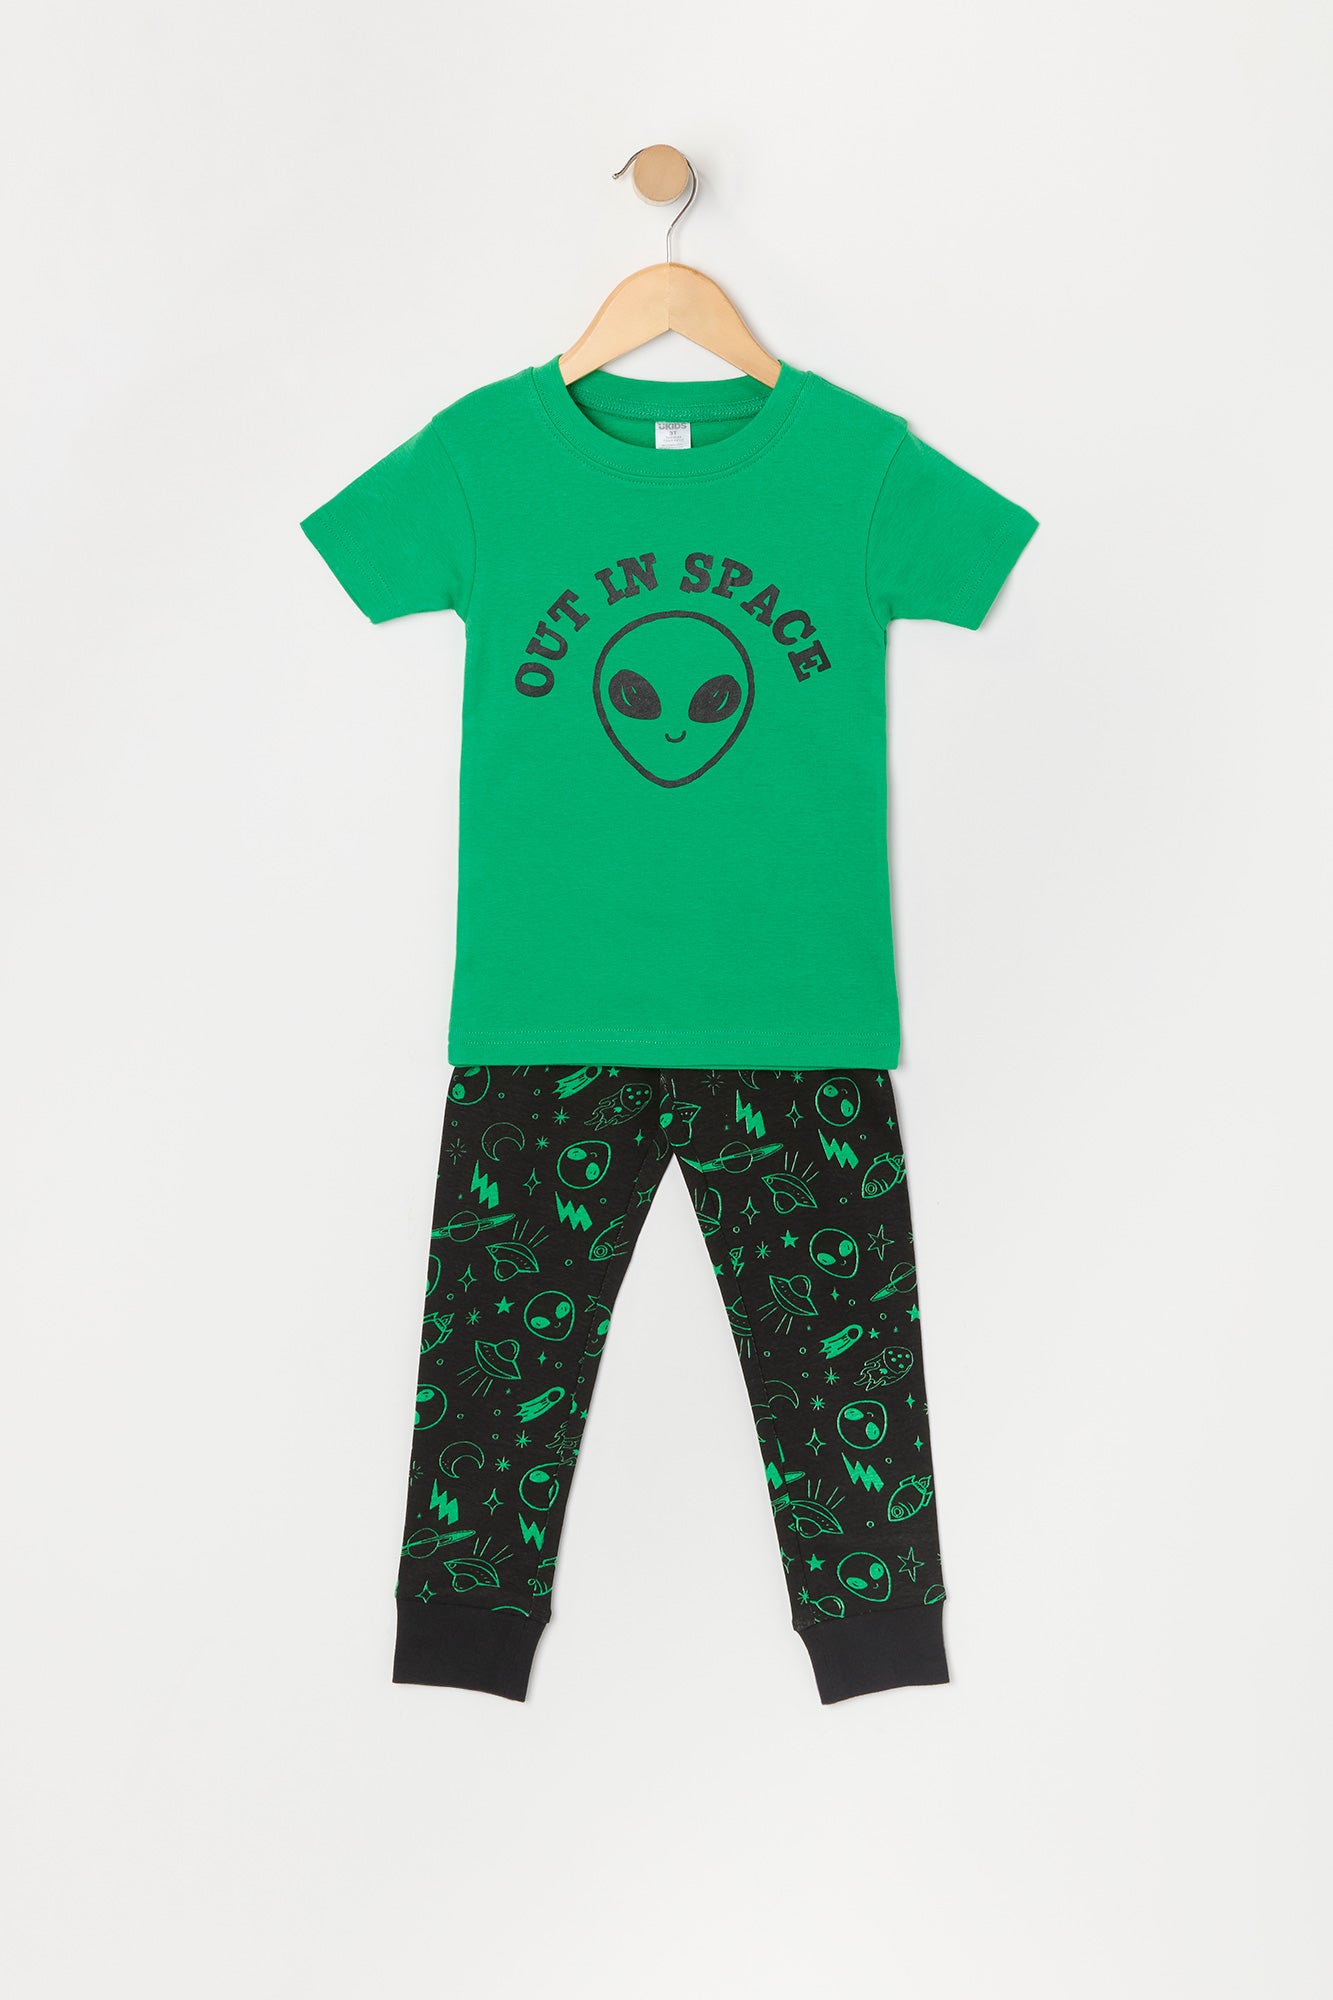 Toddler Boy Out Space 2 Piece Pajama Set